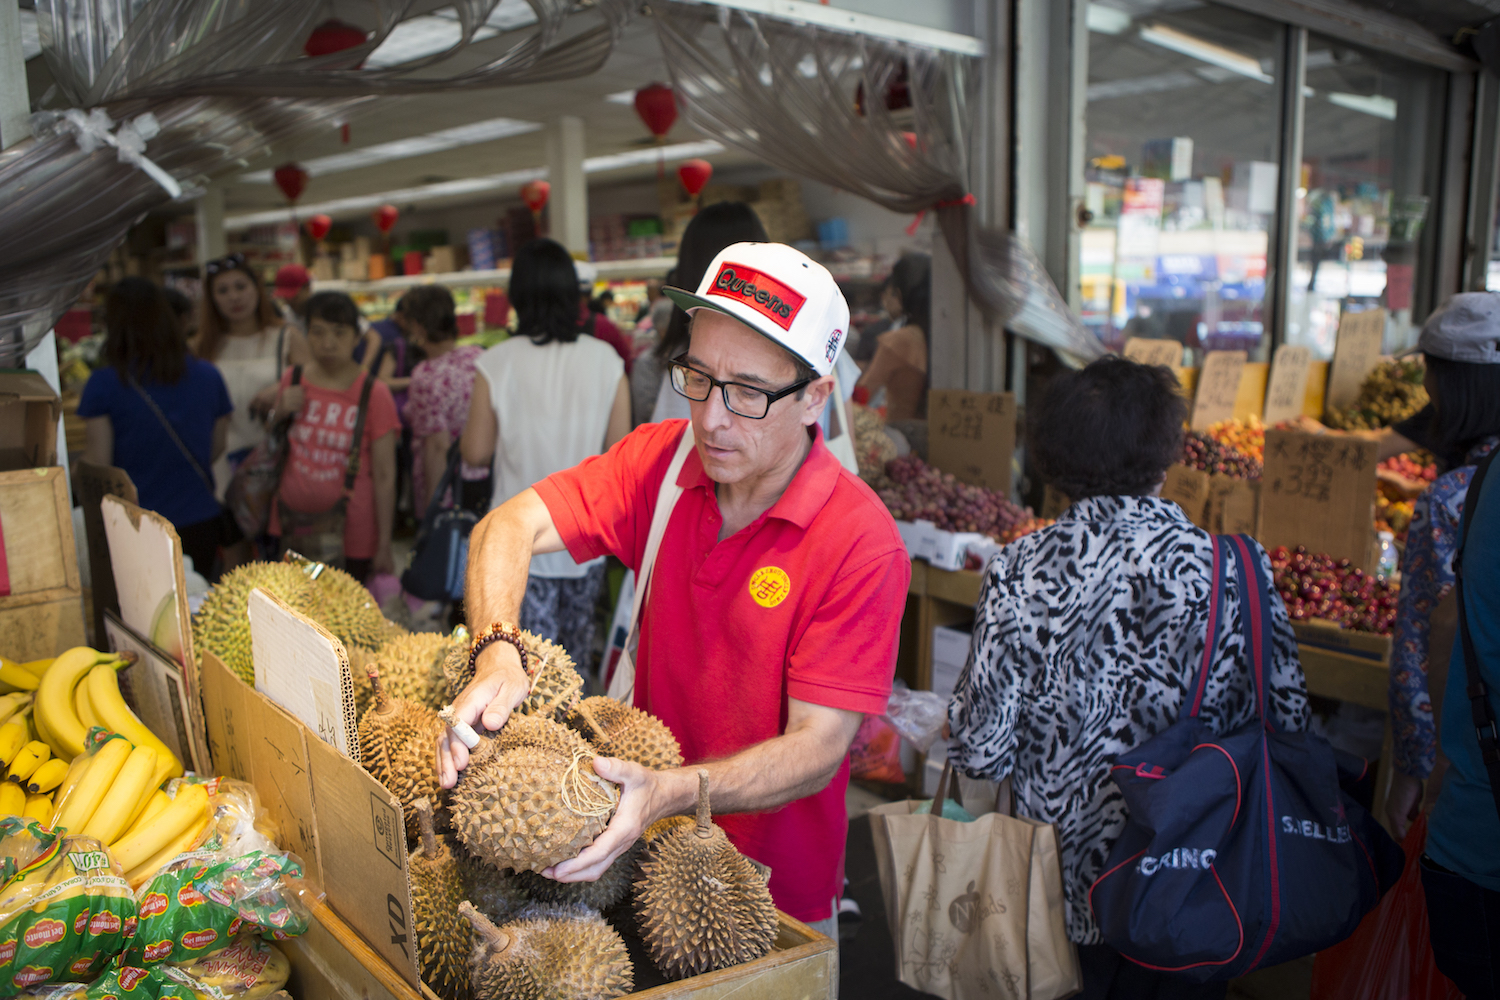 Joe DiStefano picking up a durian at Queens market.